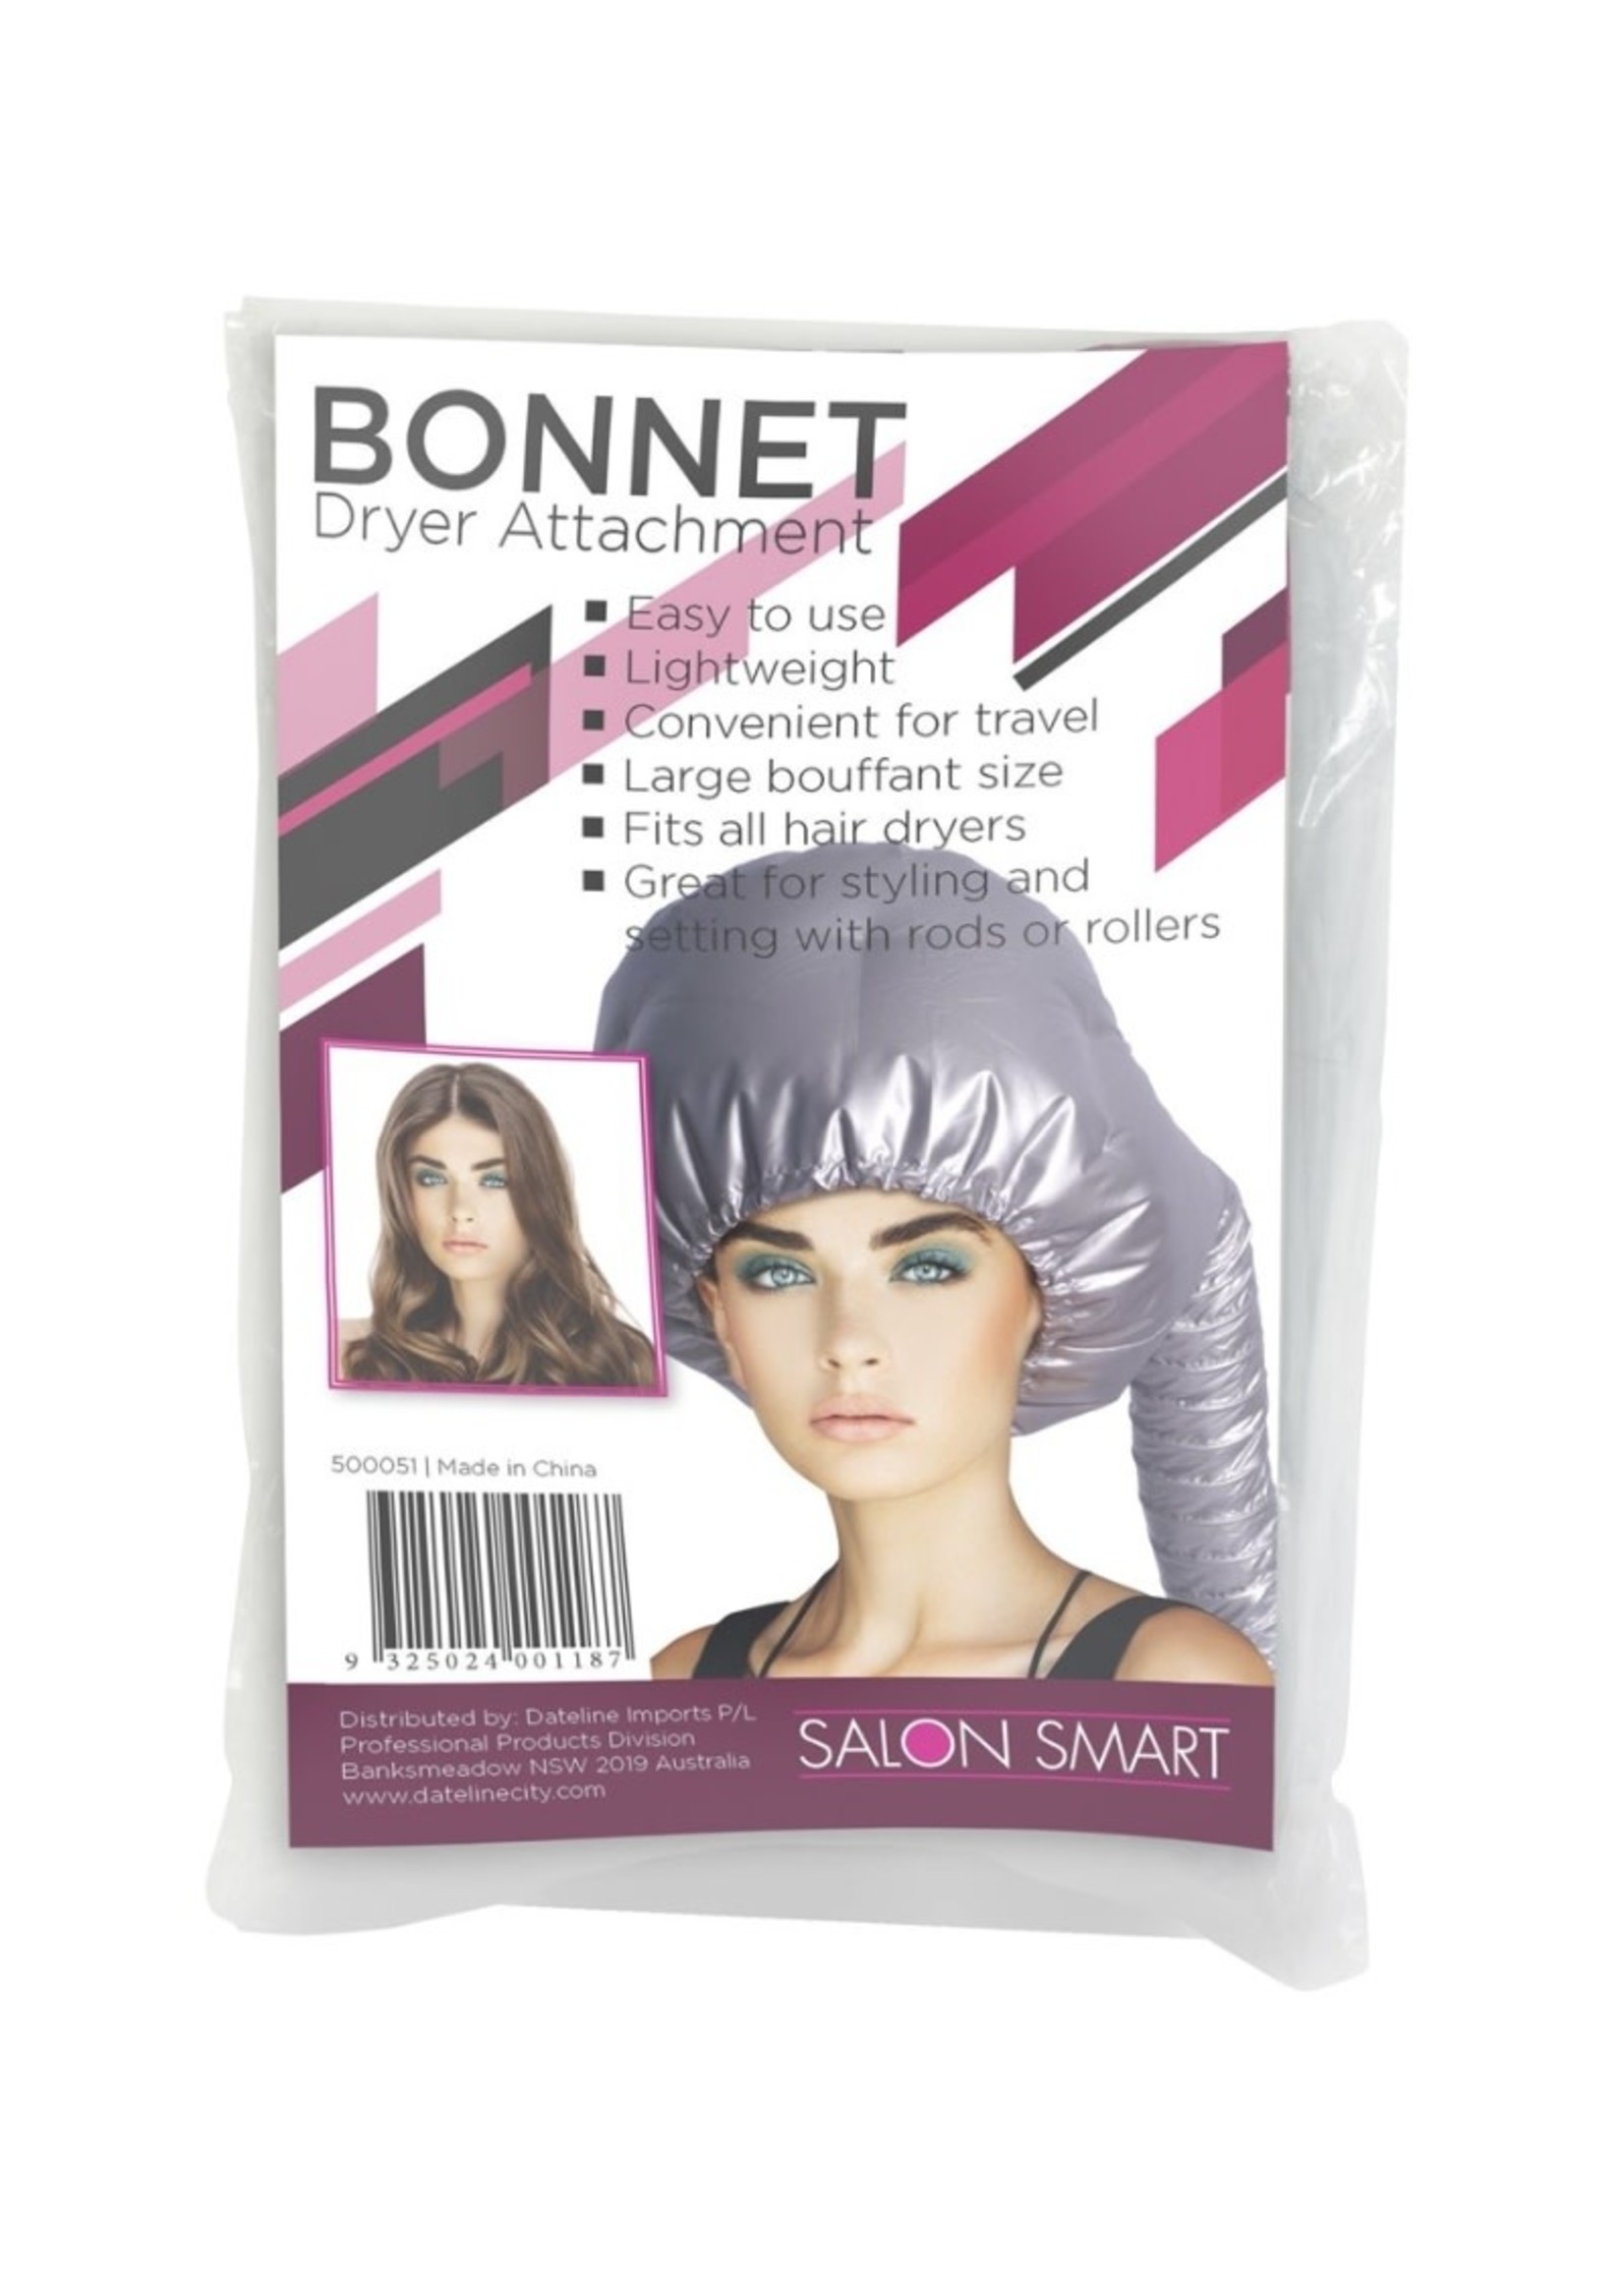 Salon Smart Salon Smart Hair Dryer Bonnet